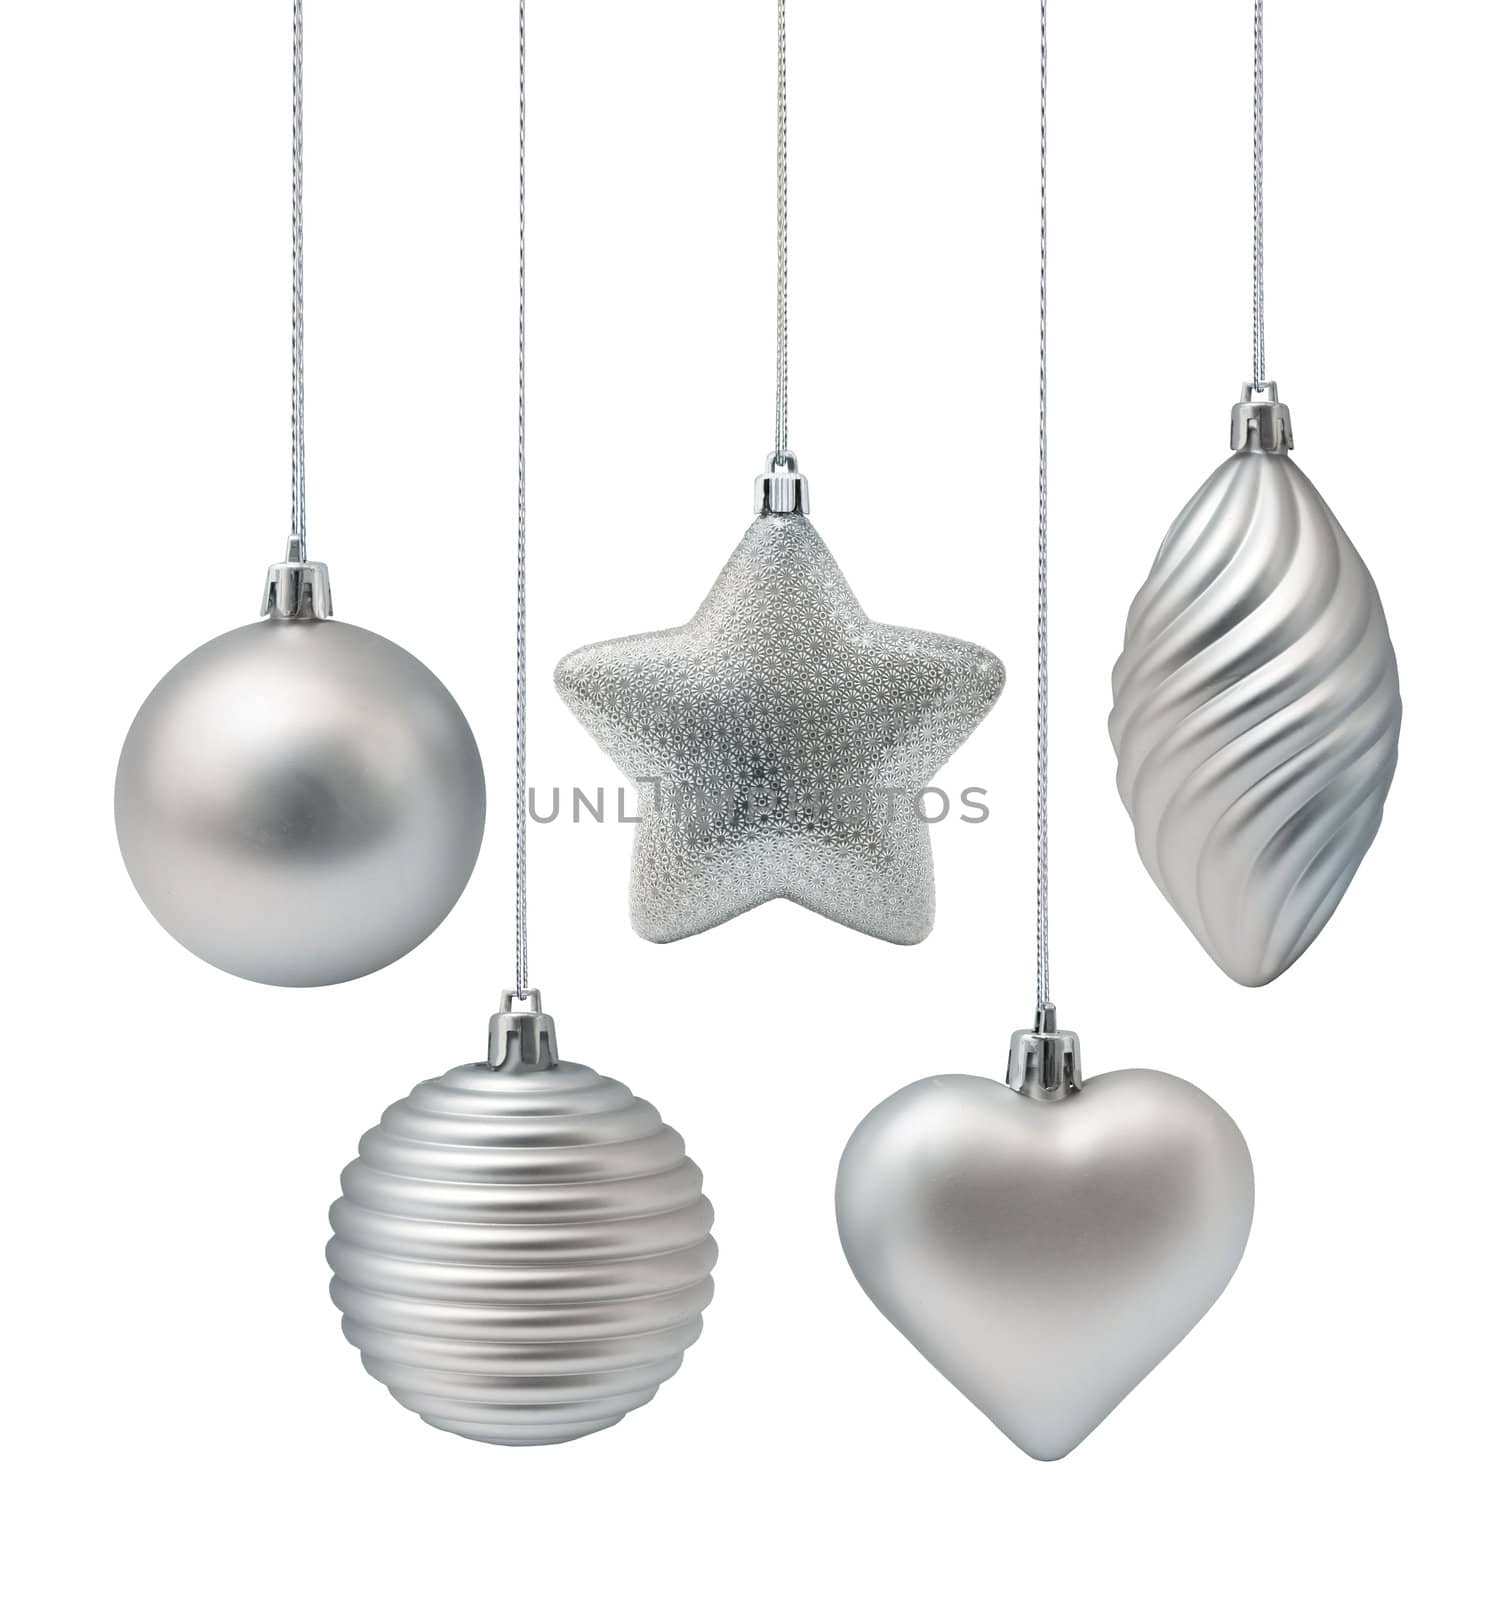 Silver Christmas decoration by anterovium